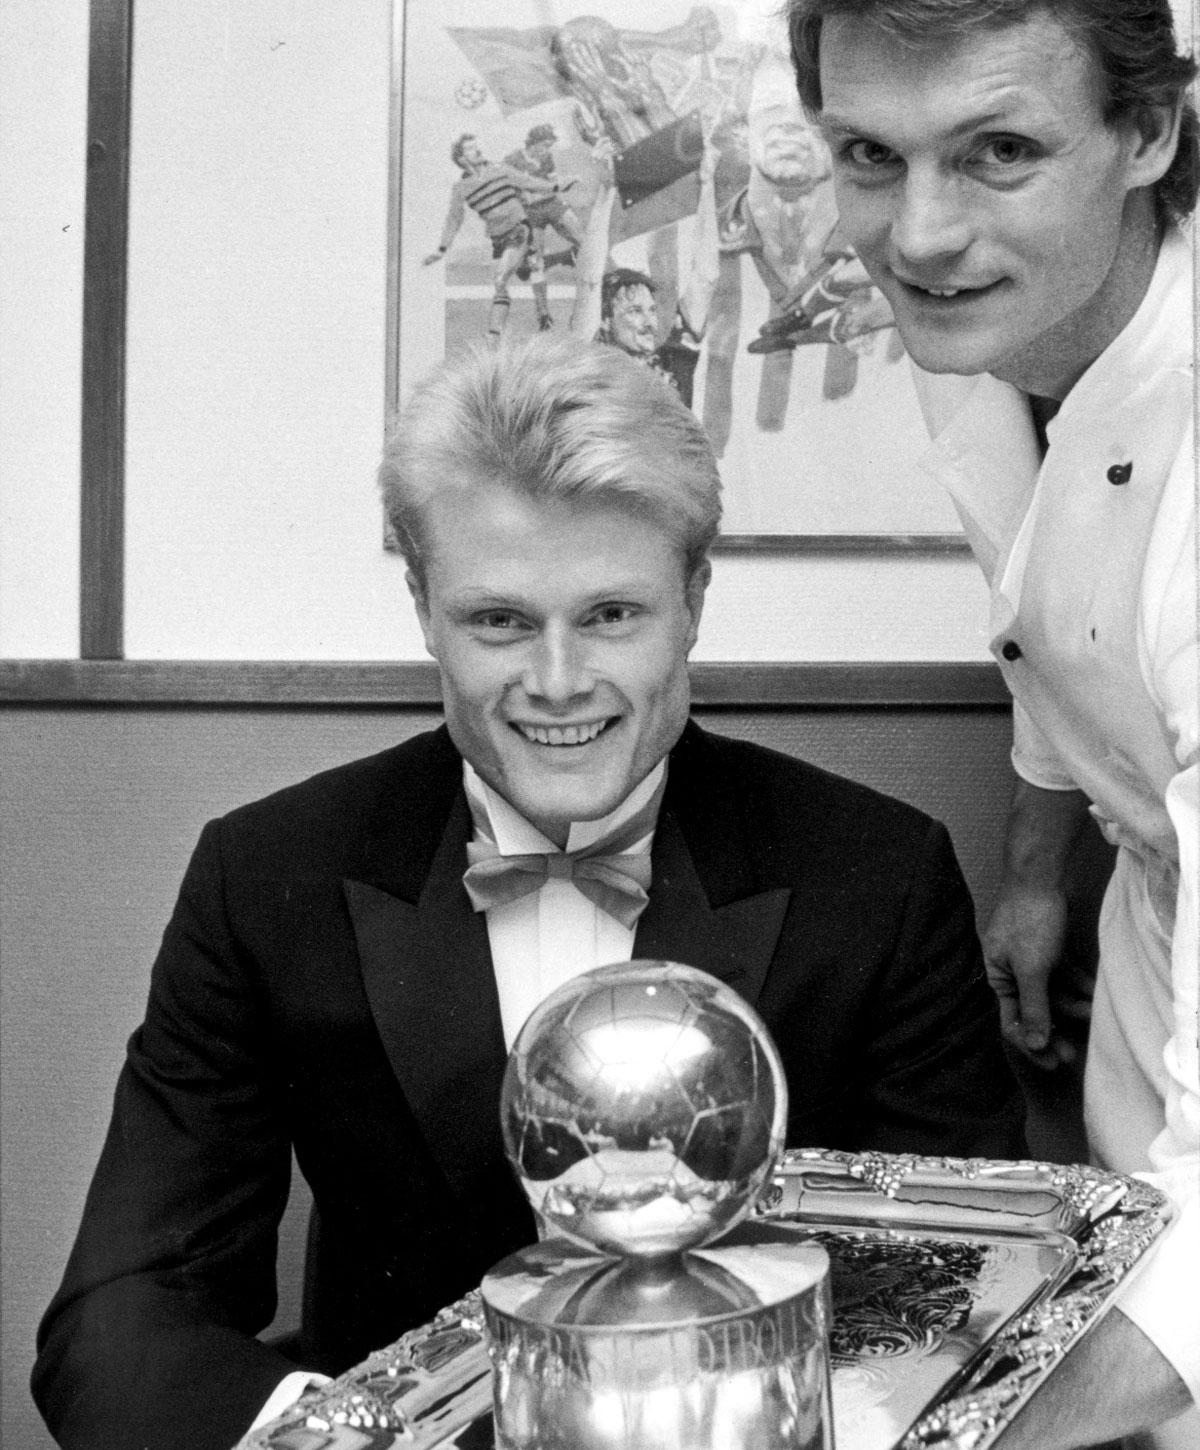 1987: Peter Larsson, Ajax